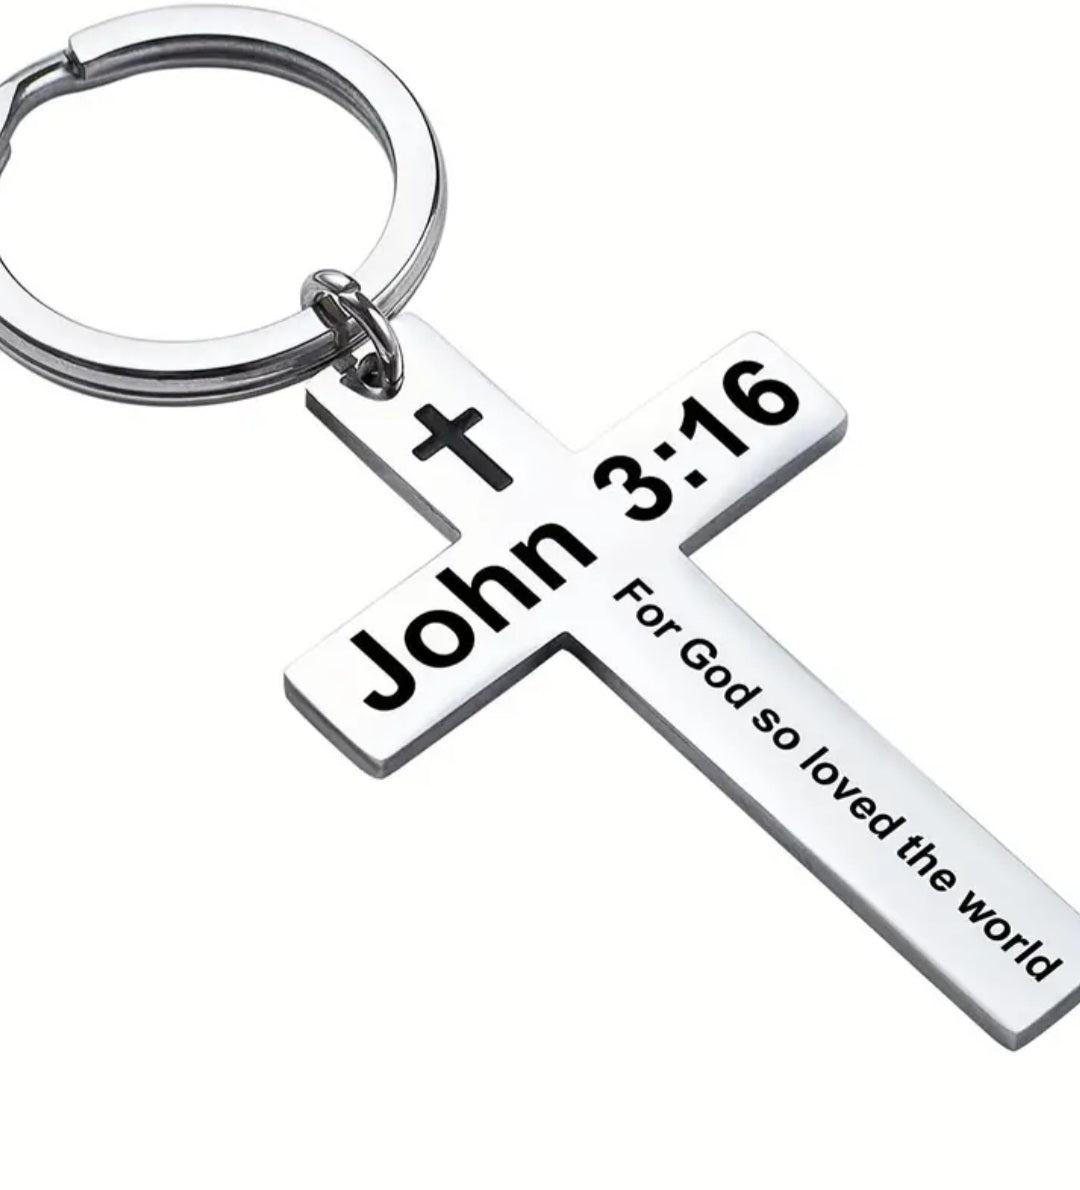 John 3:16 Cross Key Chain